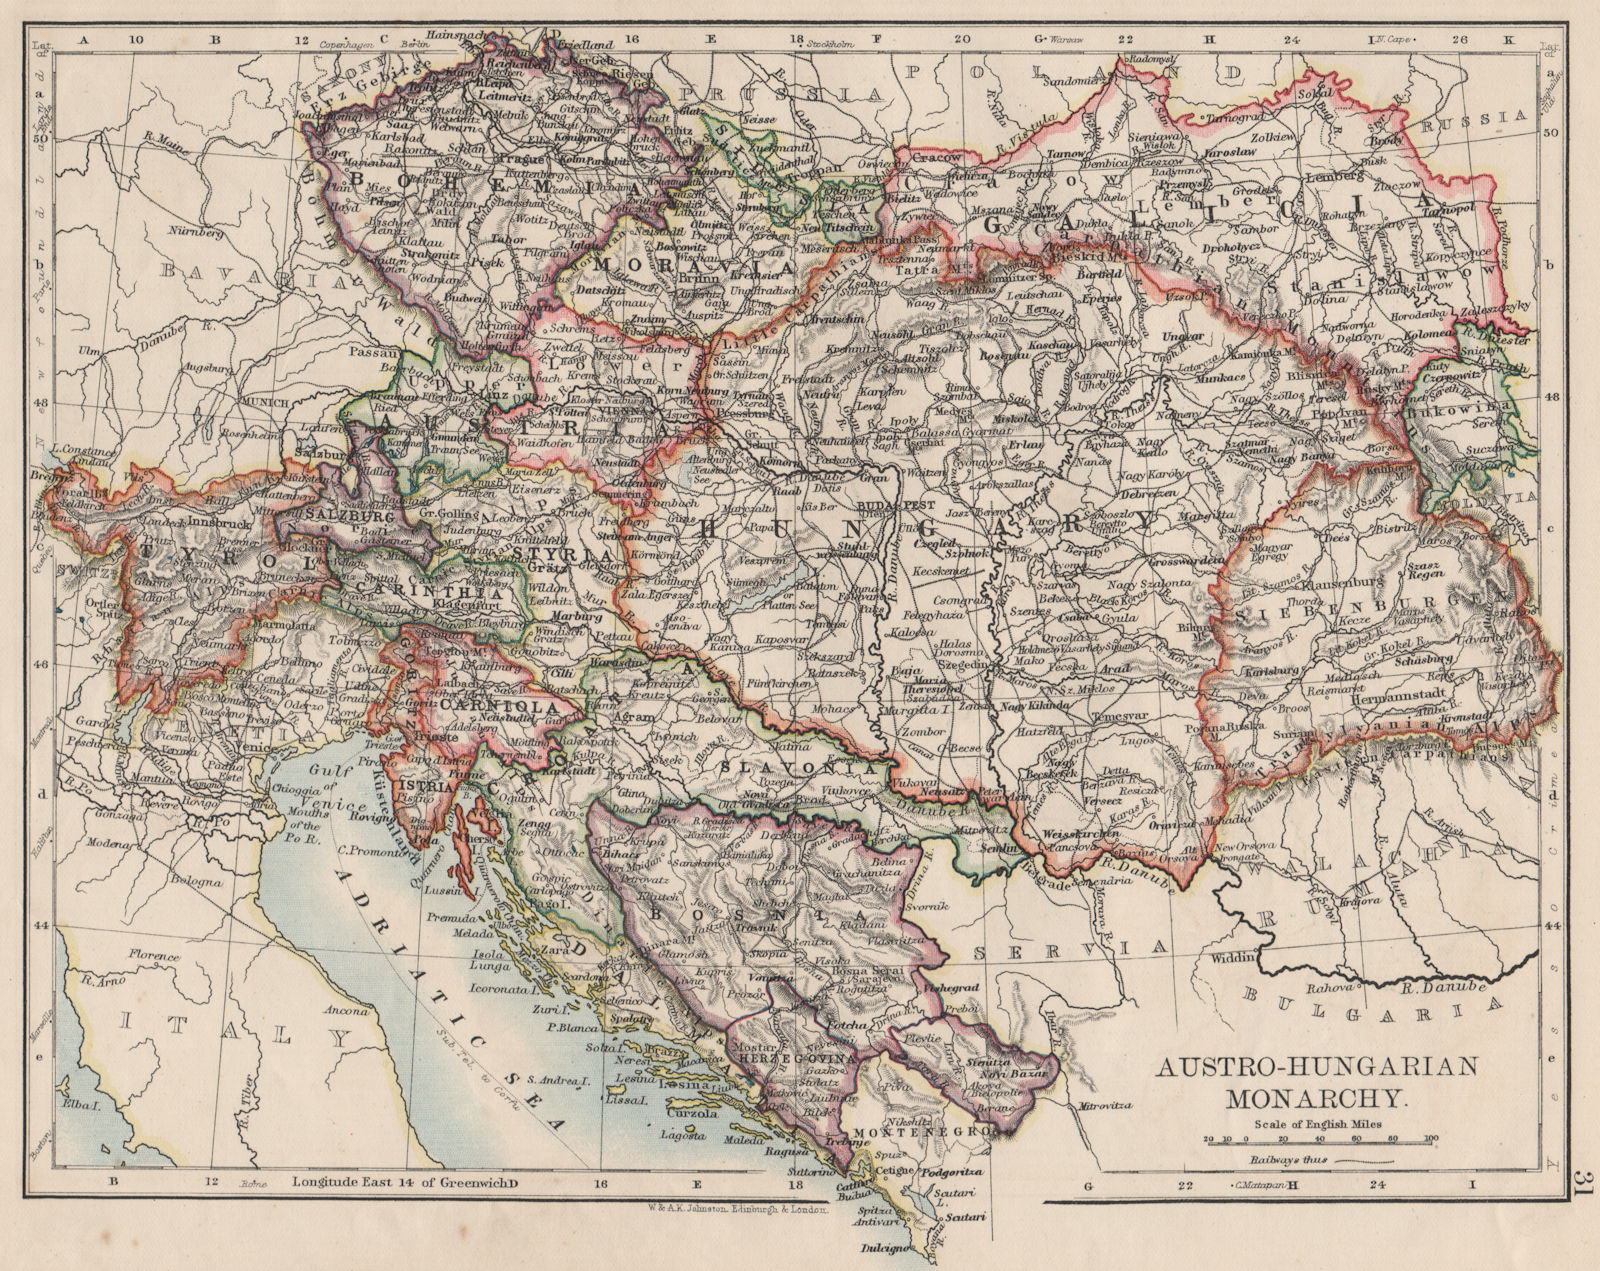 AUSTRO-HUNGARIAN MONARCHY. Dalmatia Slavonia Siebenburgen &c.  JOHNSTON 1900 map